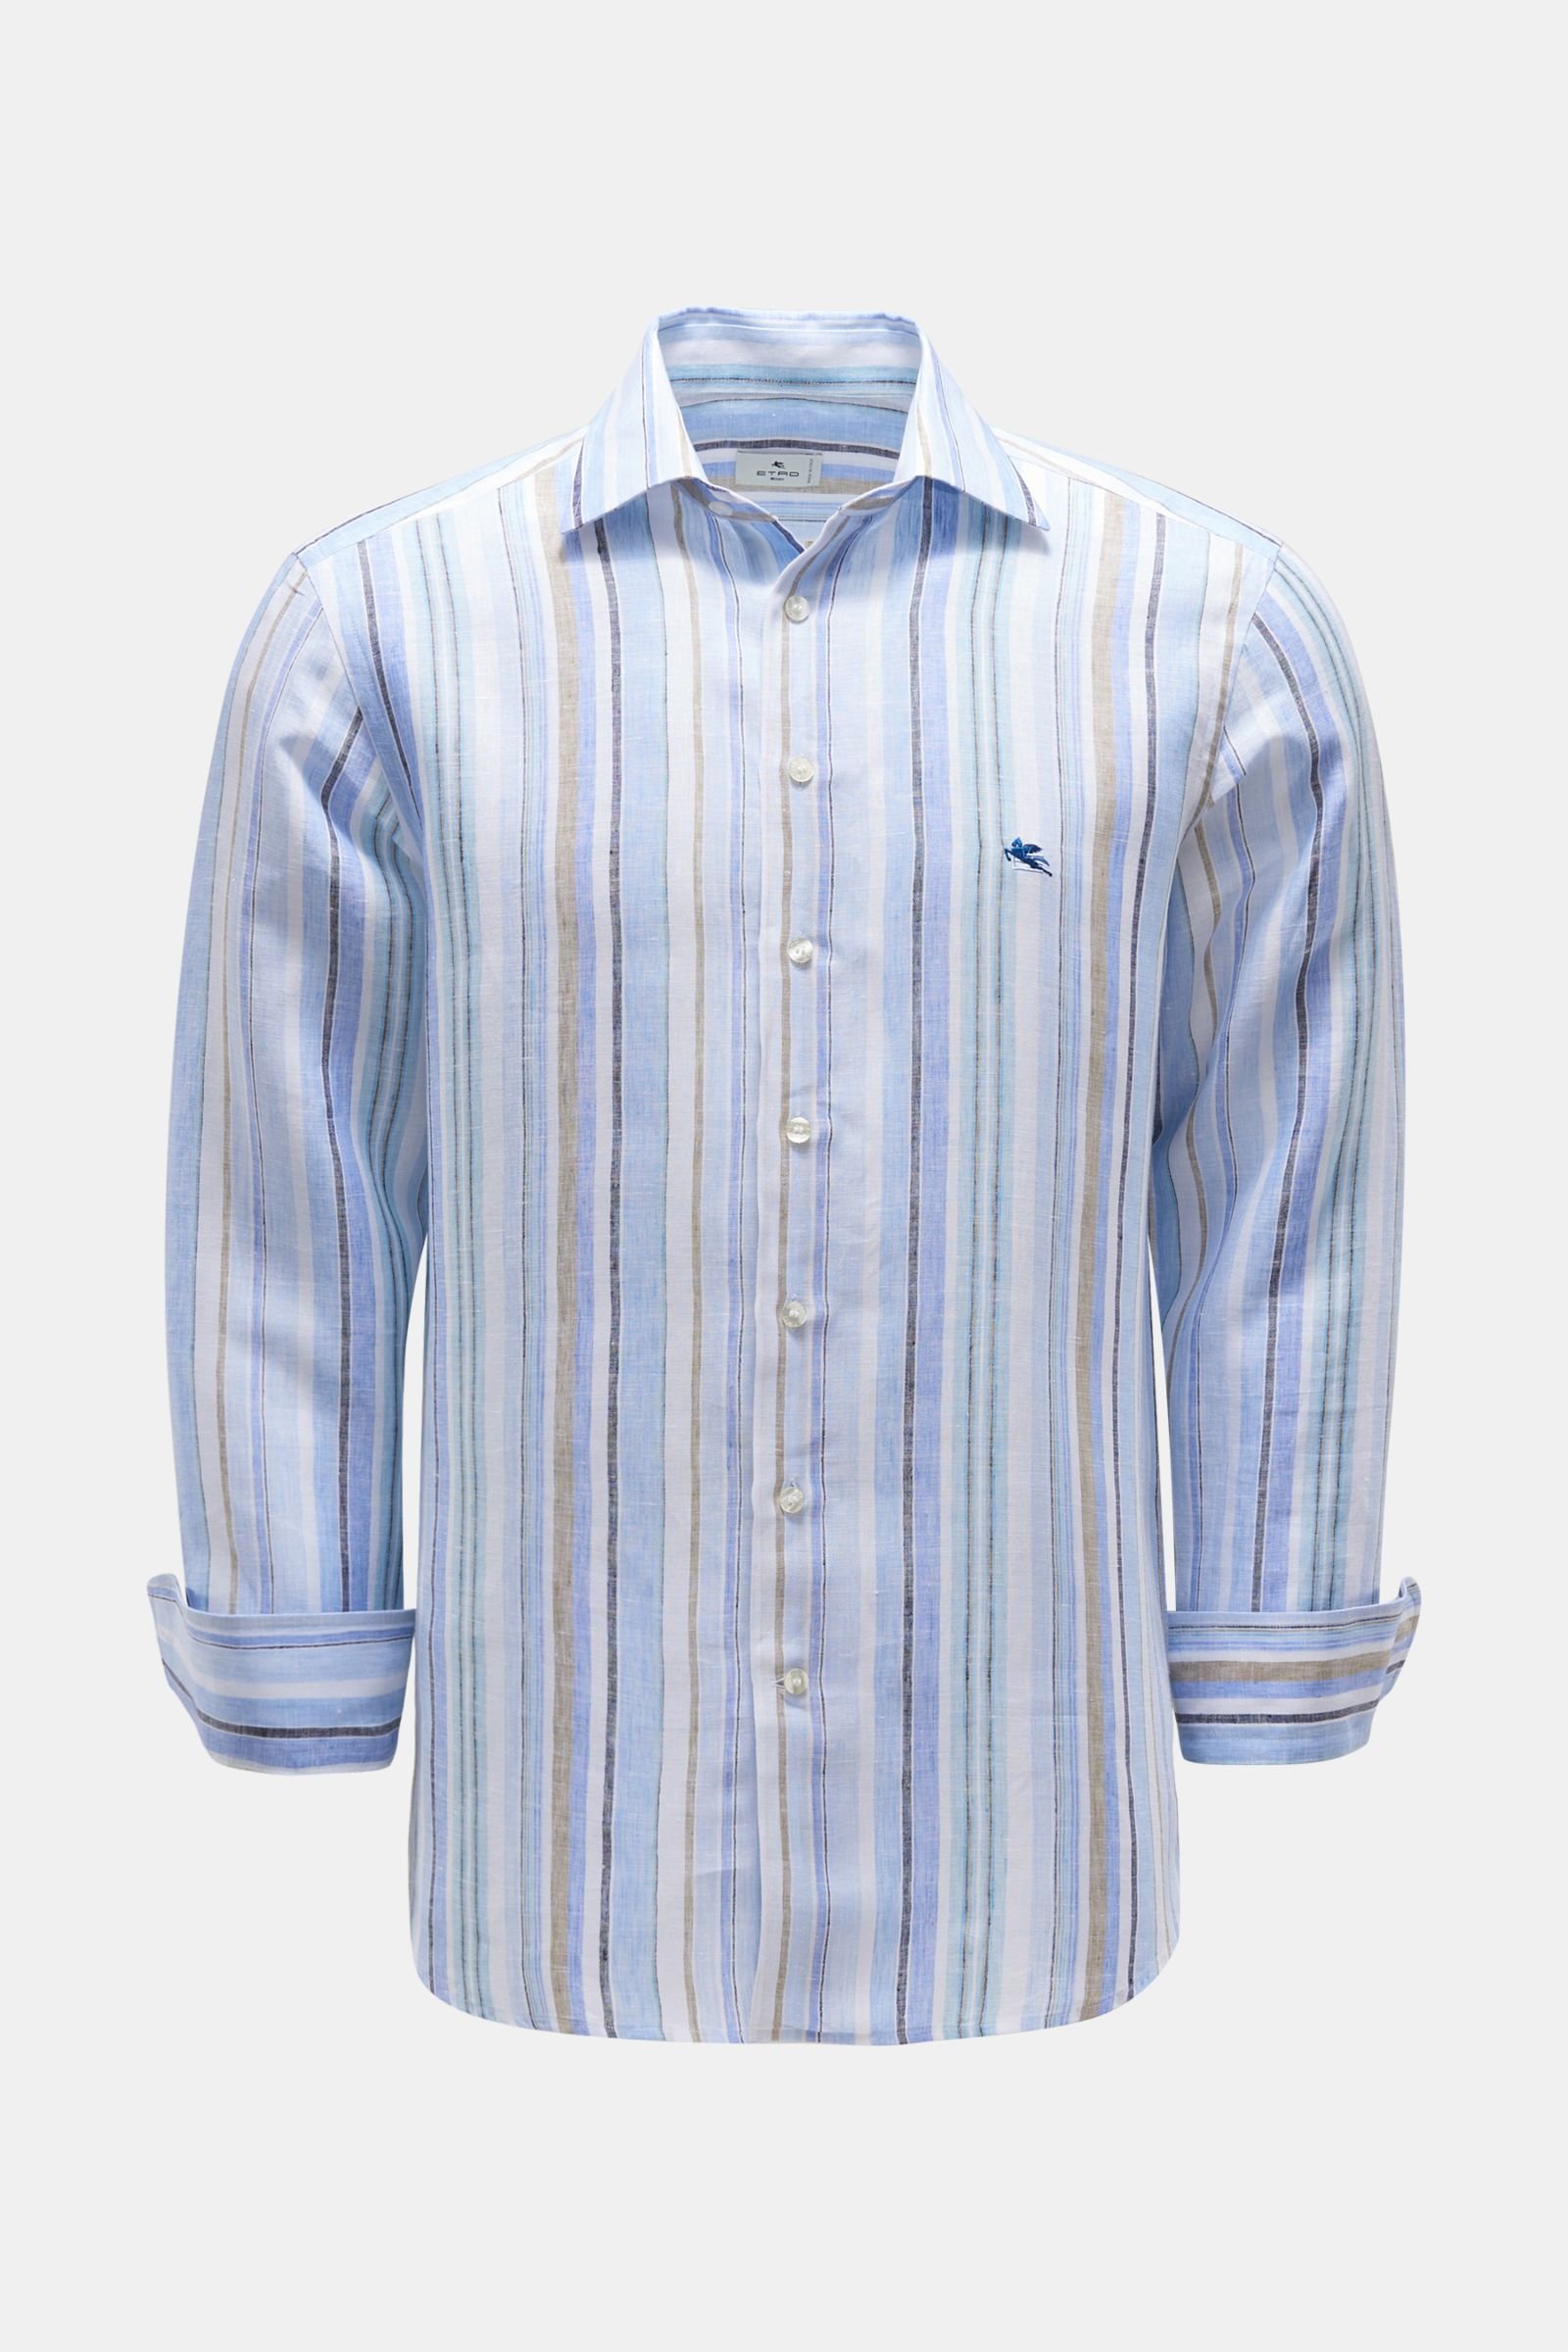 Linen shirt shark collar light blue/khaki/turquoise striped